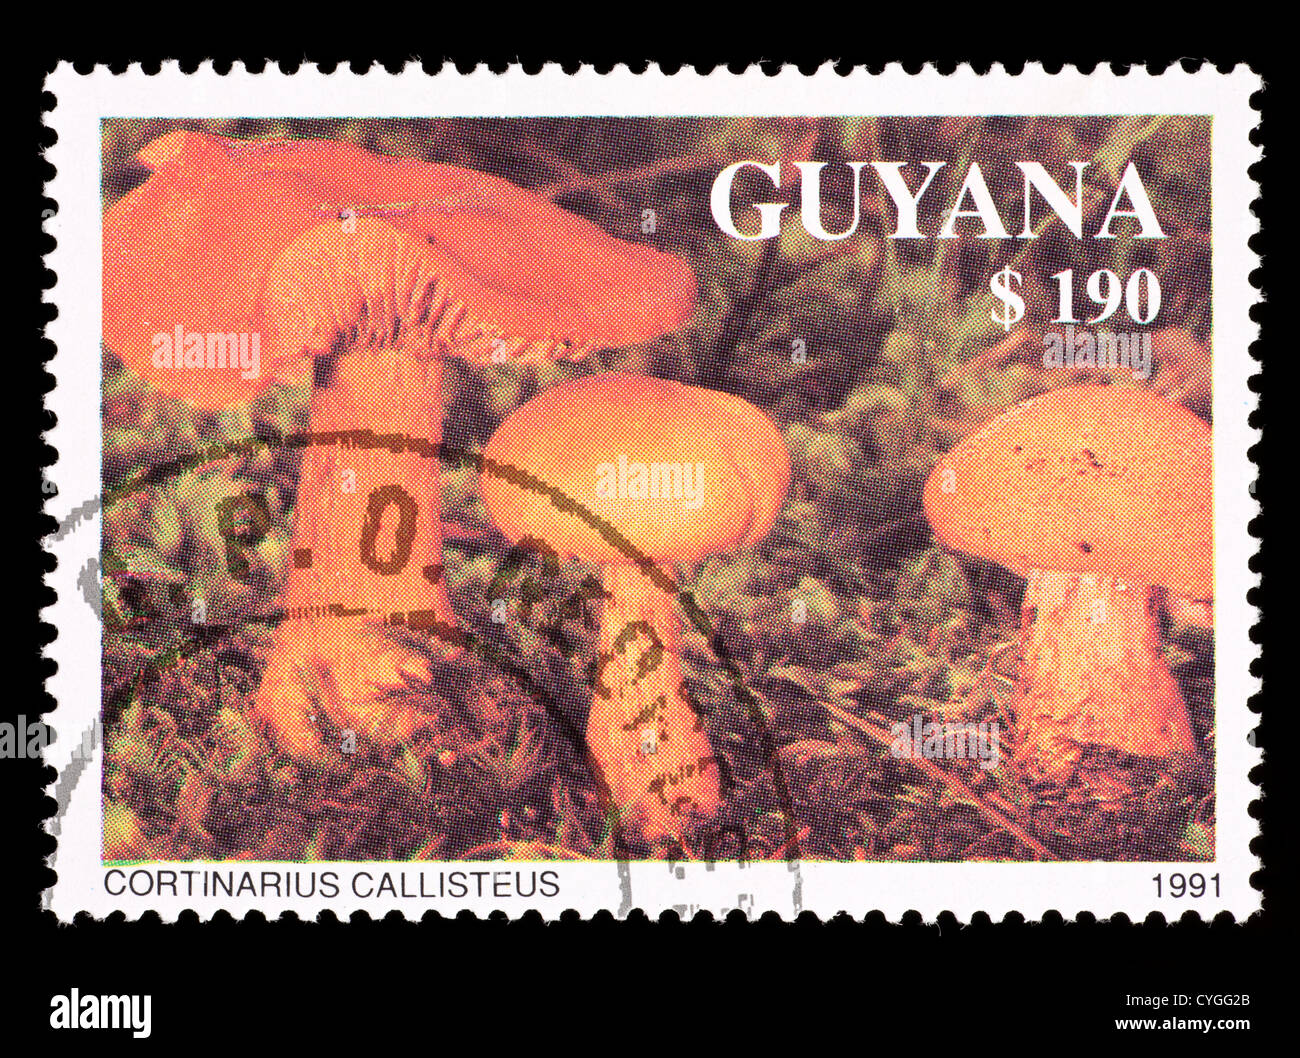 Postage stamp from Guyana depicting mushrooms (Cortinarius callisteus) Stock Photo